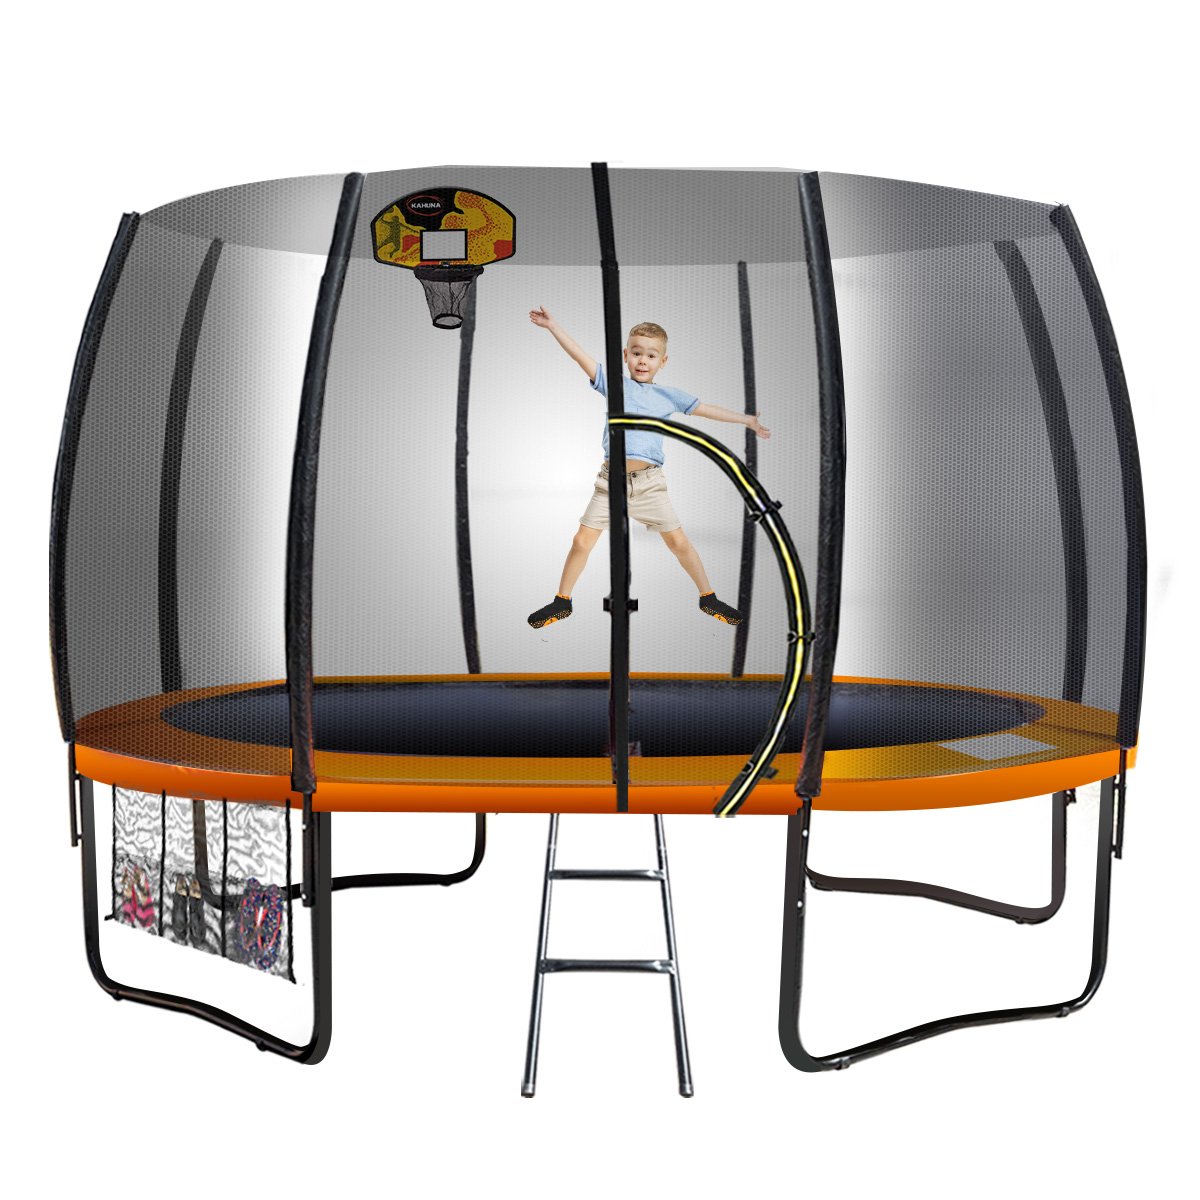 Kahuna 10ft Springless Trampoline with Basketball Set